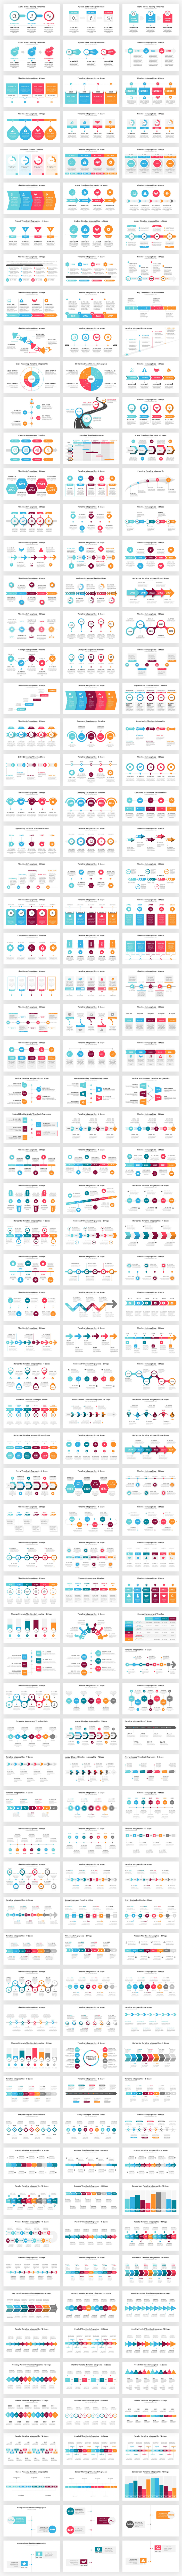 Infographics Complete Bundle PowerPoint Templates - 49